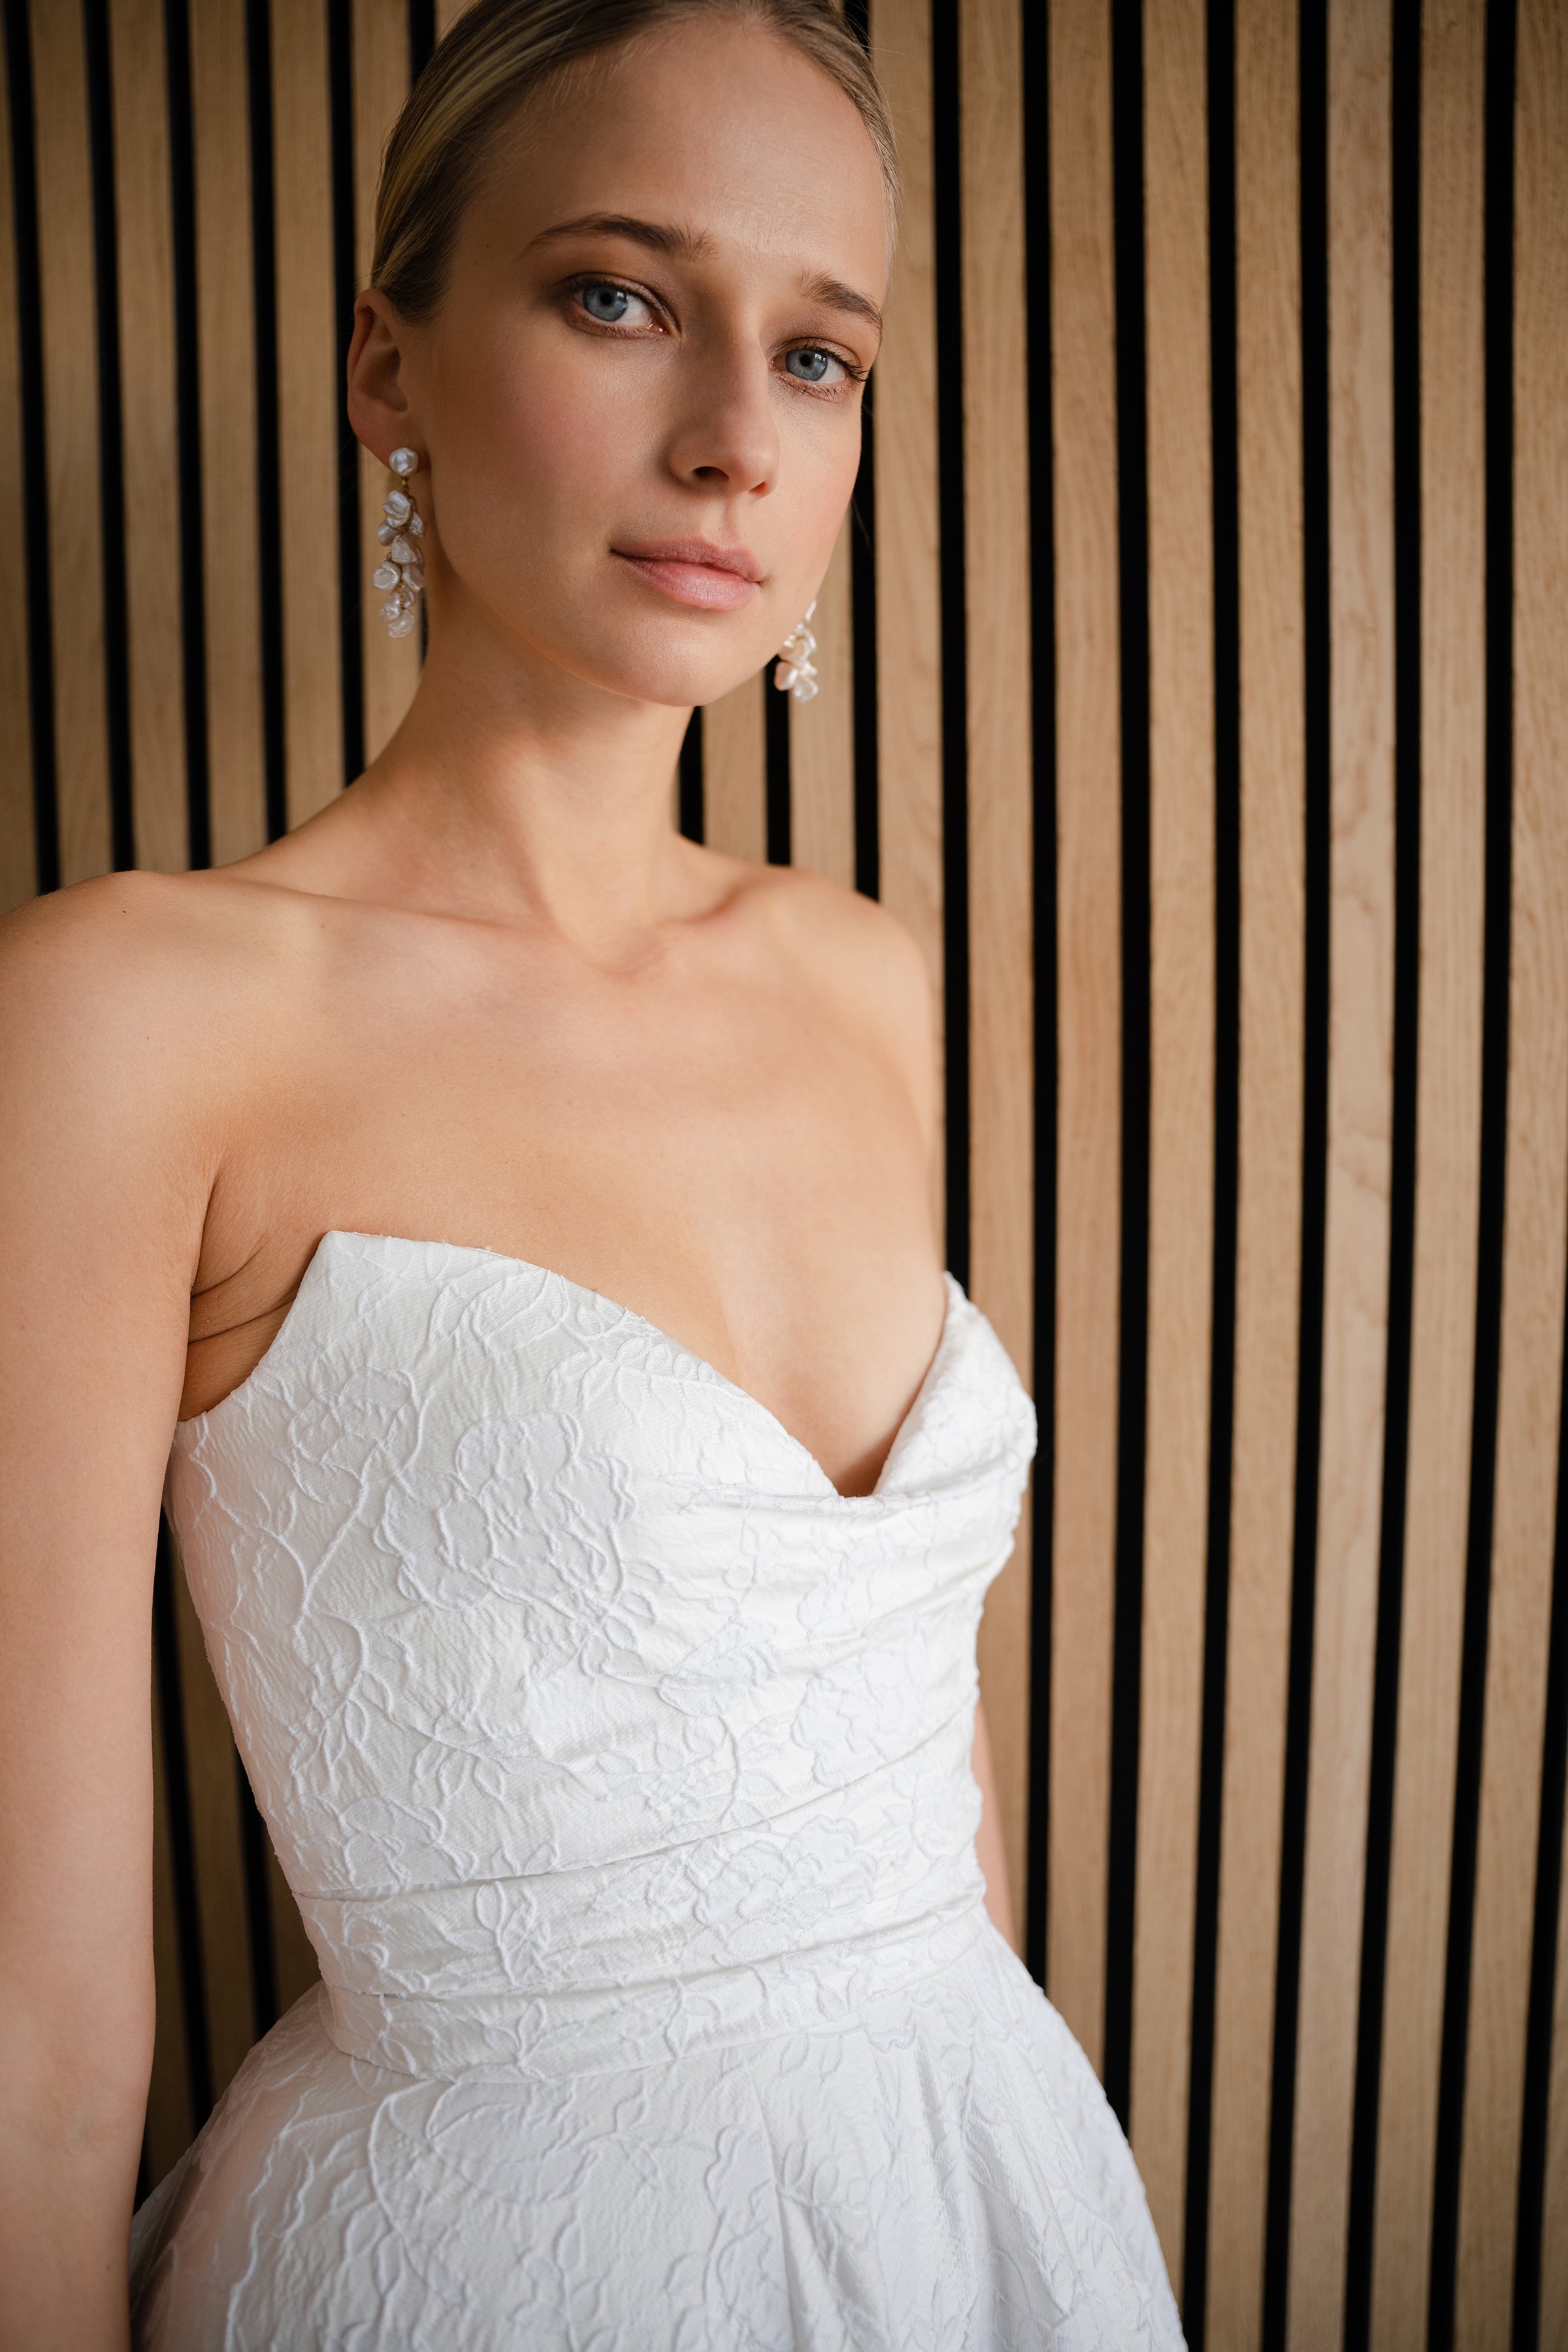 blanc-de-blanc-bridal-boutique-pittsburgh-cleveland-dress-wedding-gown-jenny-yoo-beau-detail.jpg